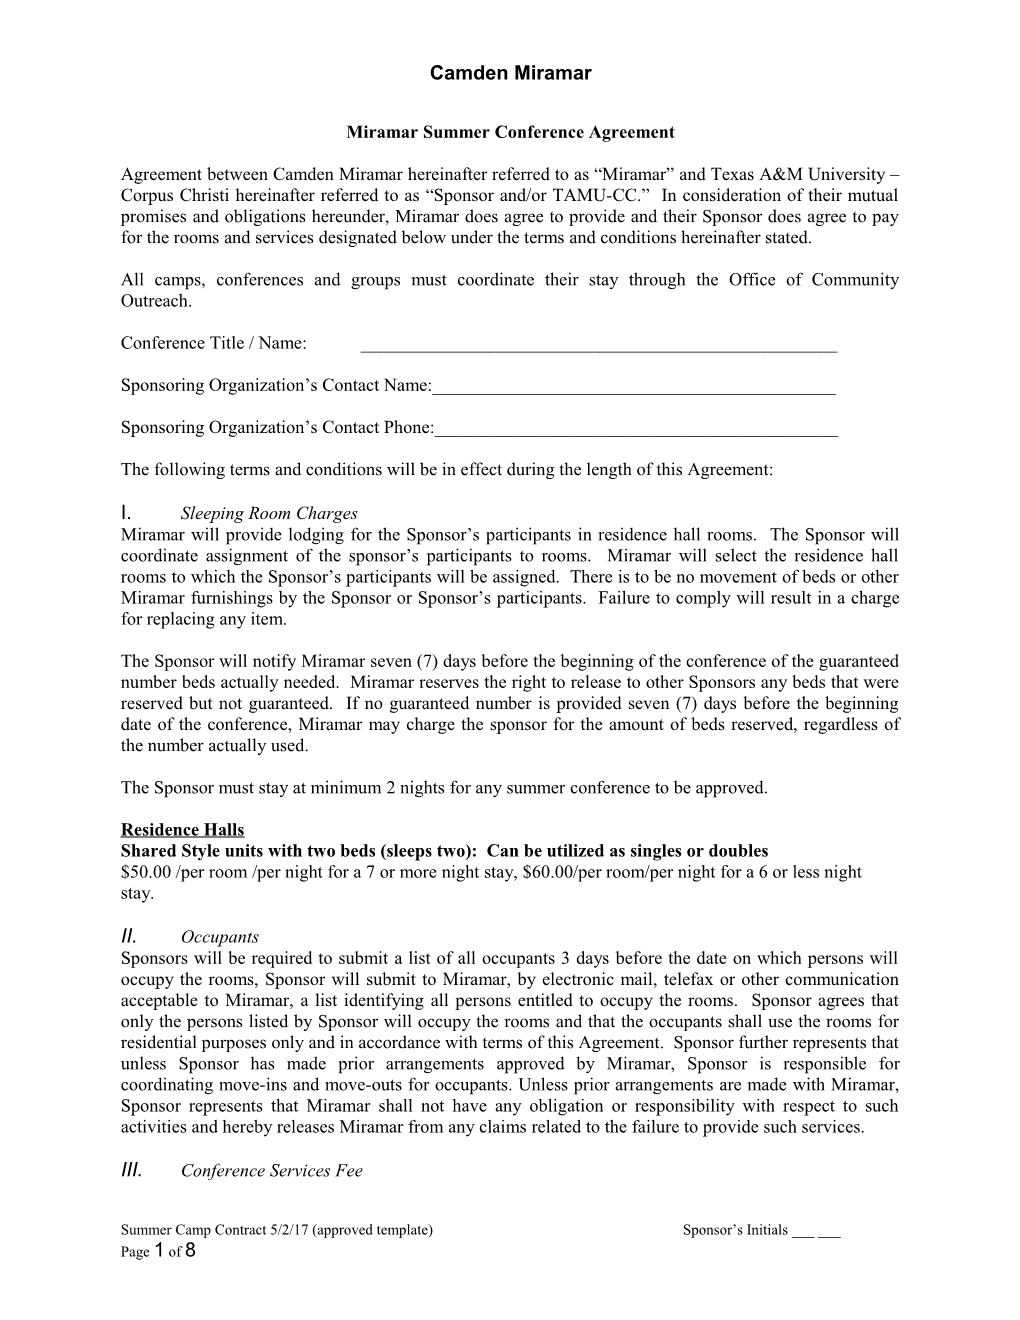 Camden/Miramar/Summer Conference Agreement Track Changes (01099996)